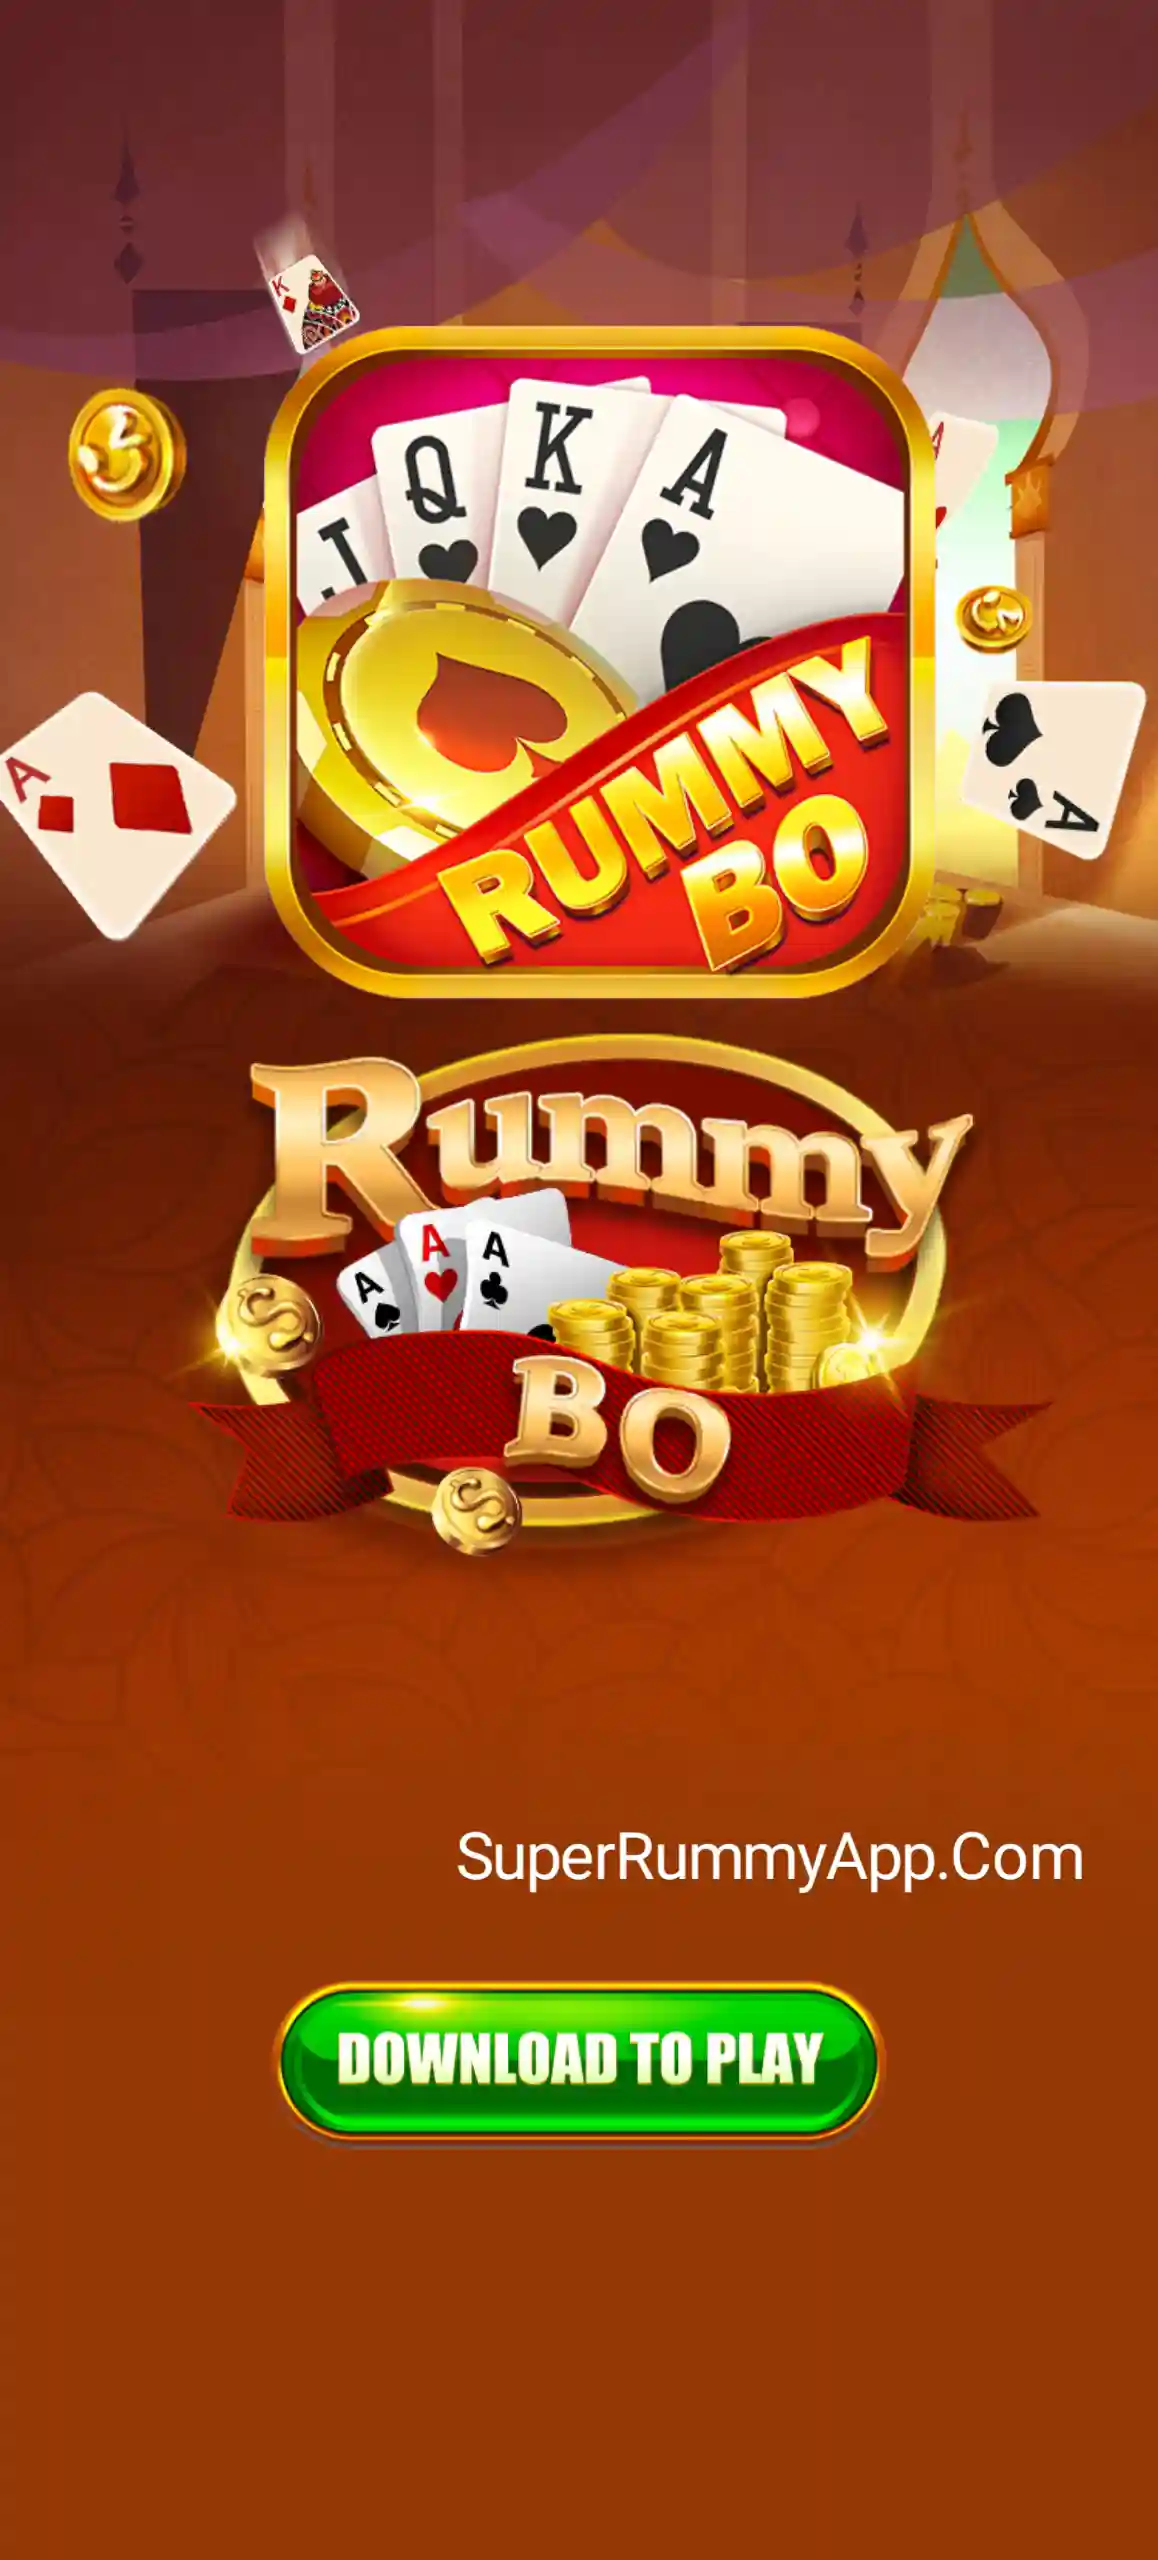 Rummy Bo Apk Download - Super Rummy App